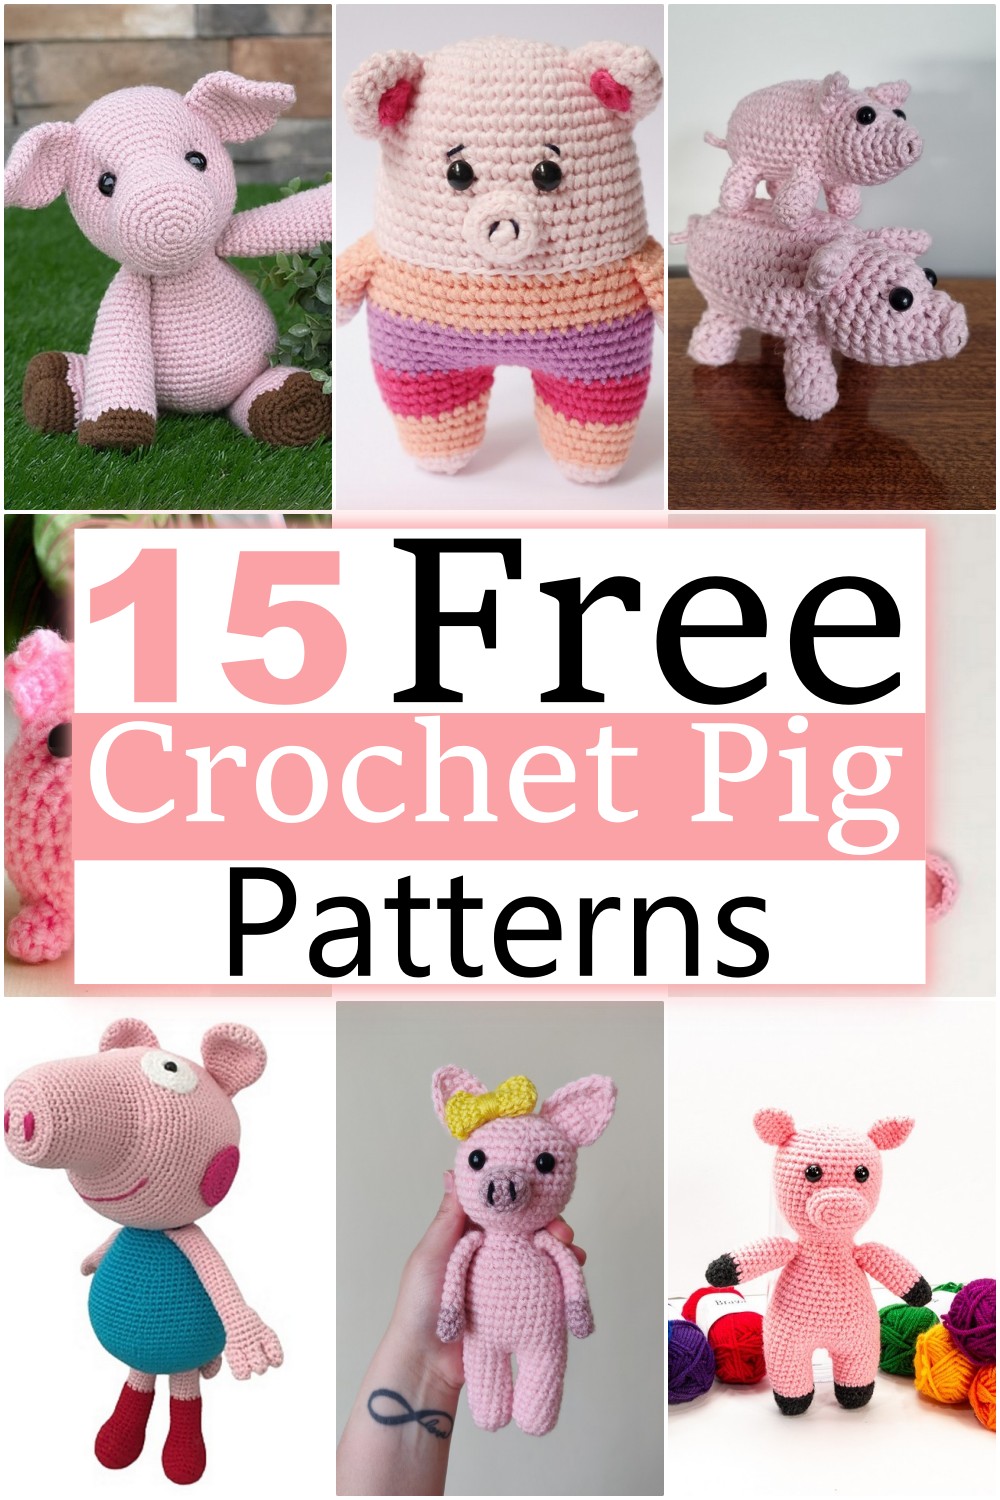 Free Crochet Pig Patterns